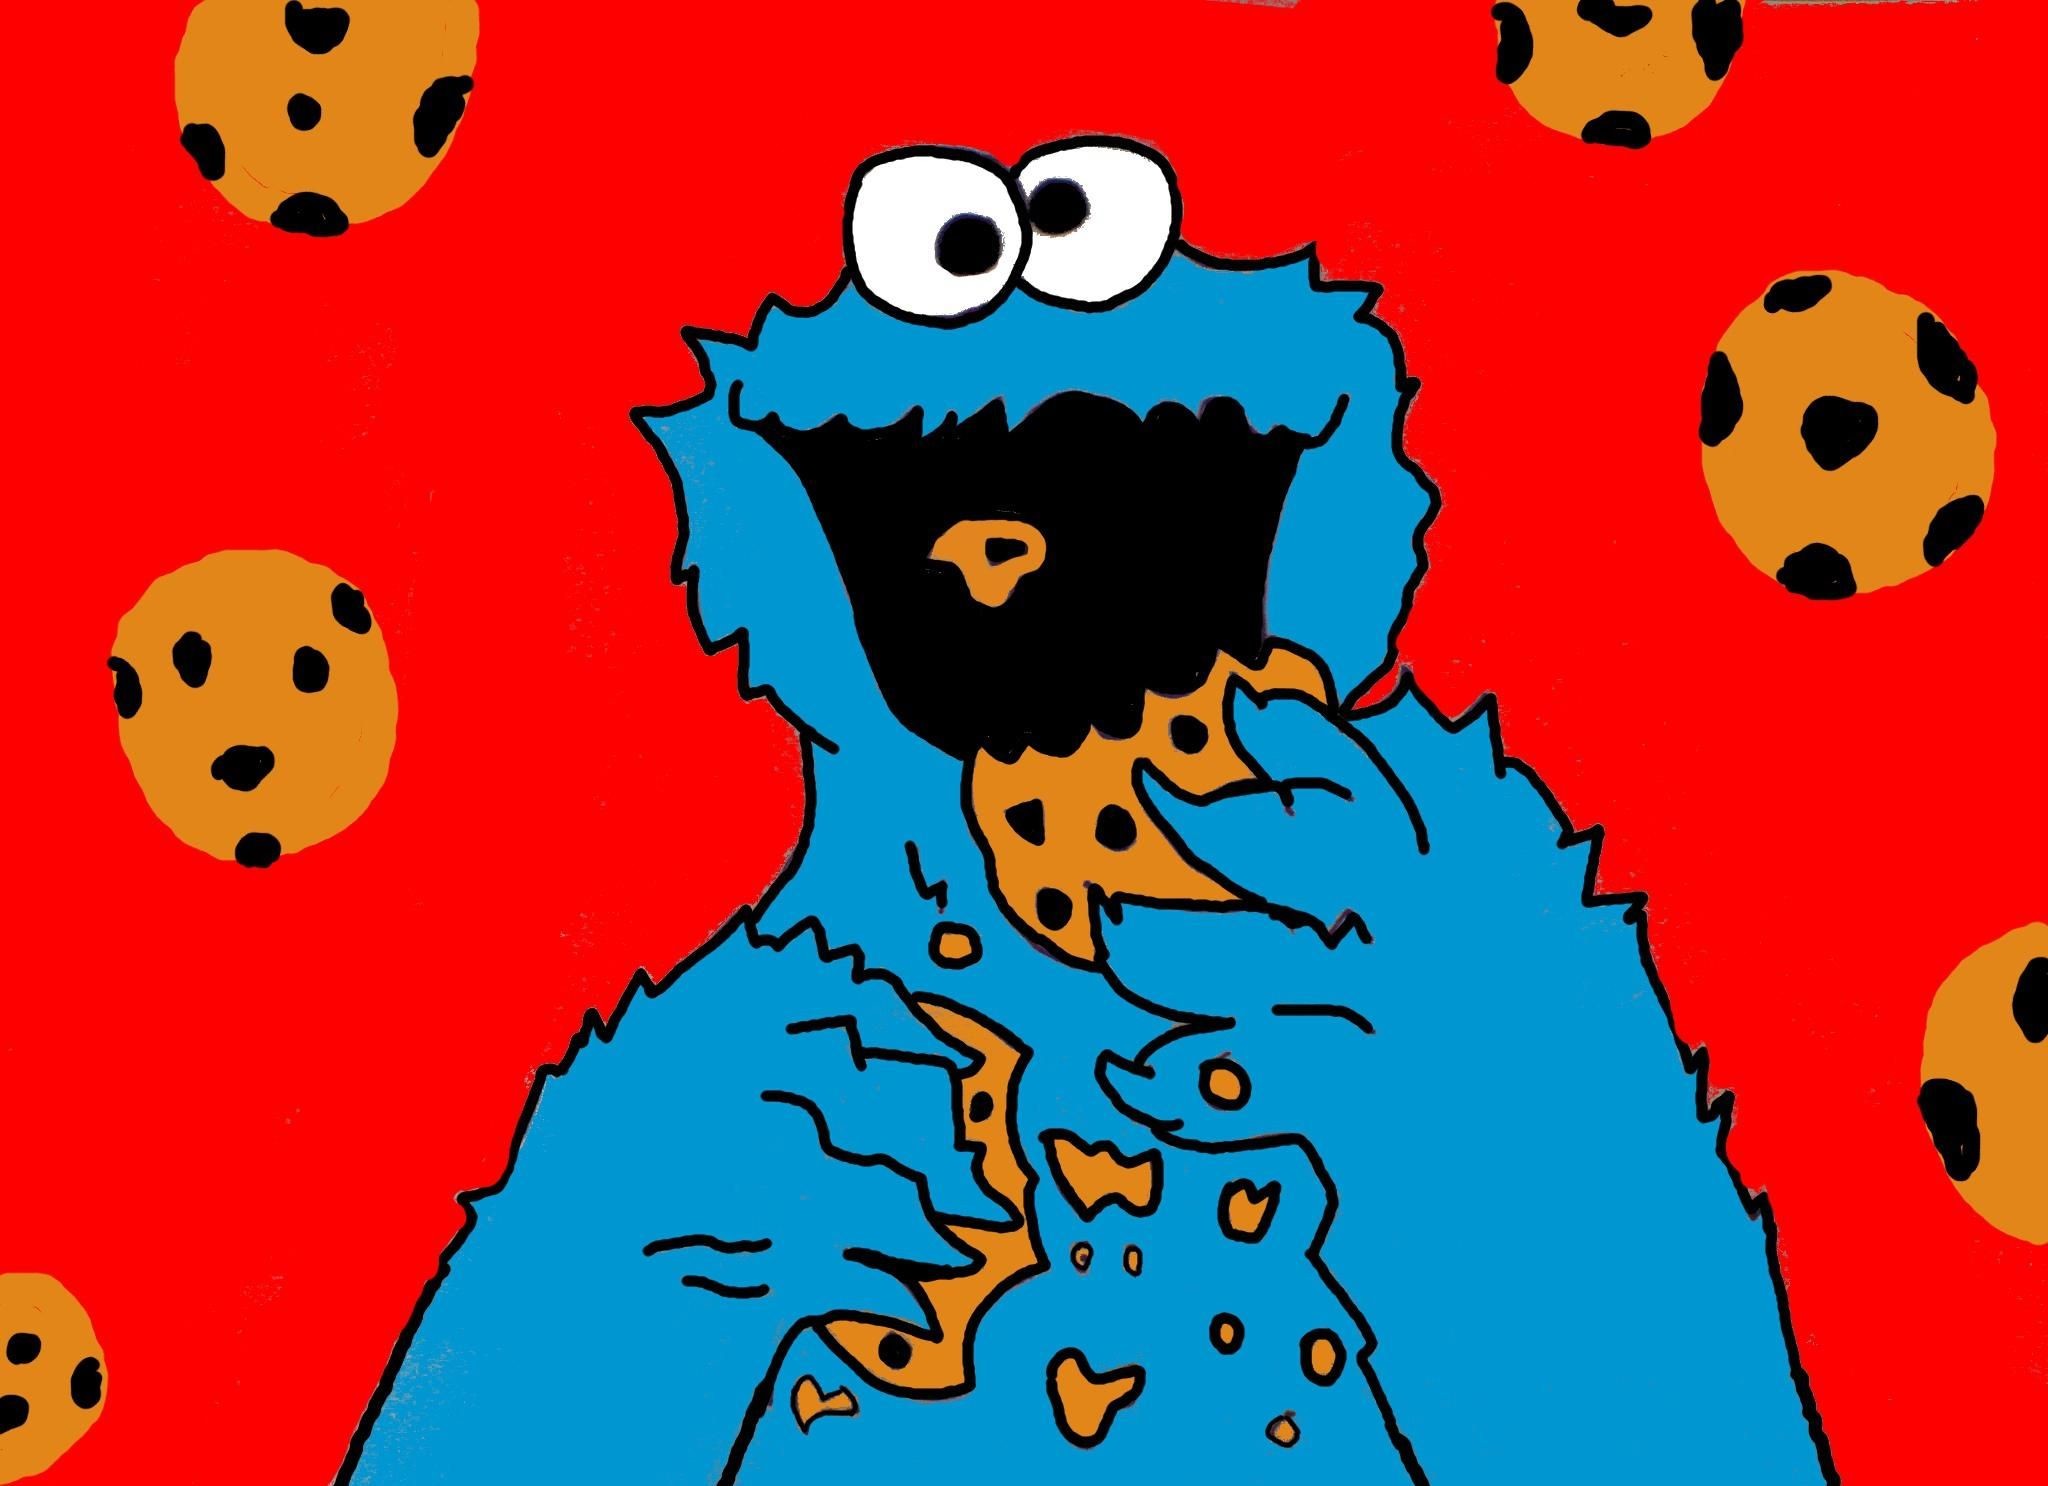 2048x1486 Pictures for Desktop: cute cookie monster wallpaper, 173 kB - Barden  Kingsman